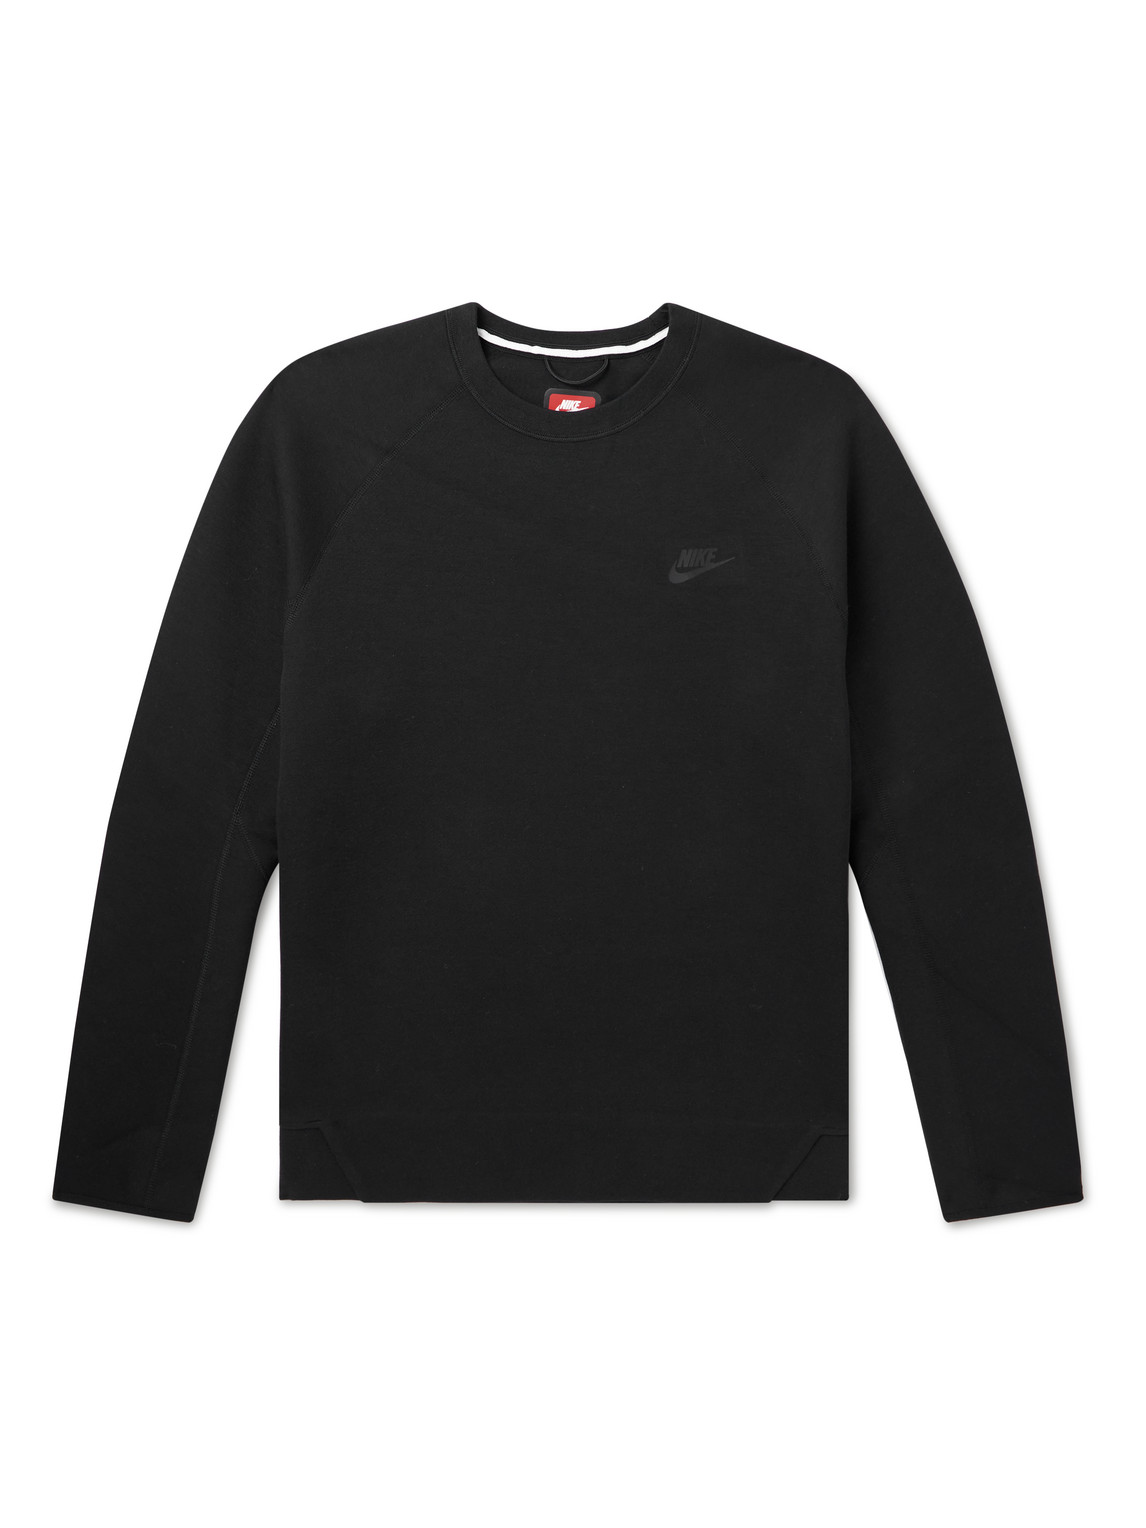 Nike - Logo-Print Cotton-Blend Jersey Sweatshirt - Men - Black - M von Nike